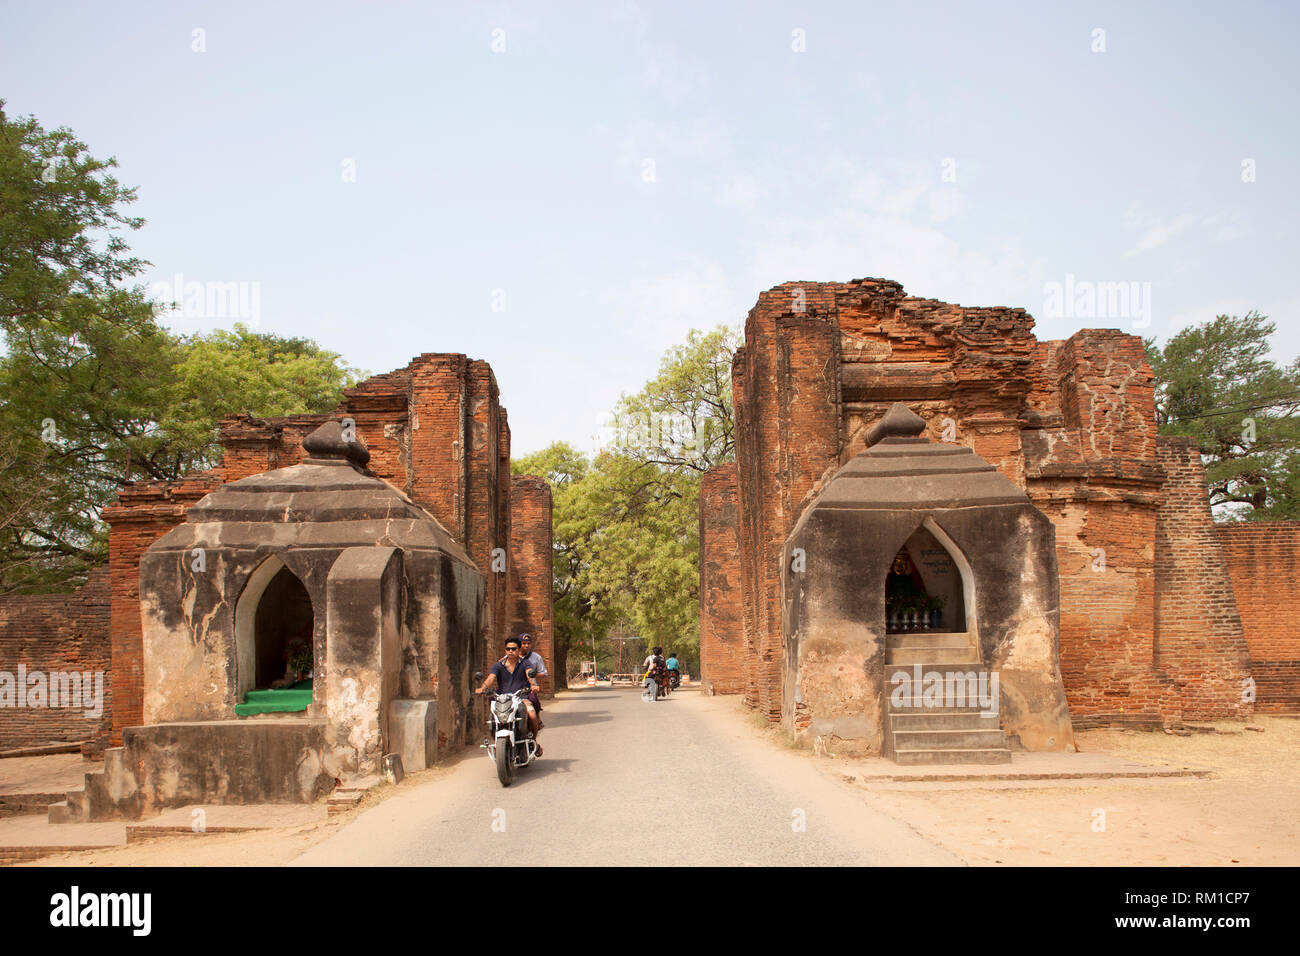 Tharabar gate and walls, Old Bagan village, Mandalay region, Myanmar, Asia Stock Photo